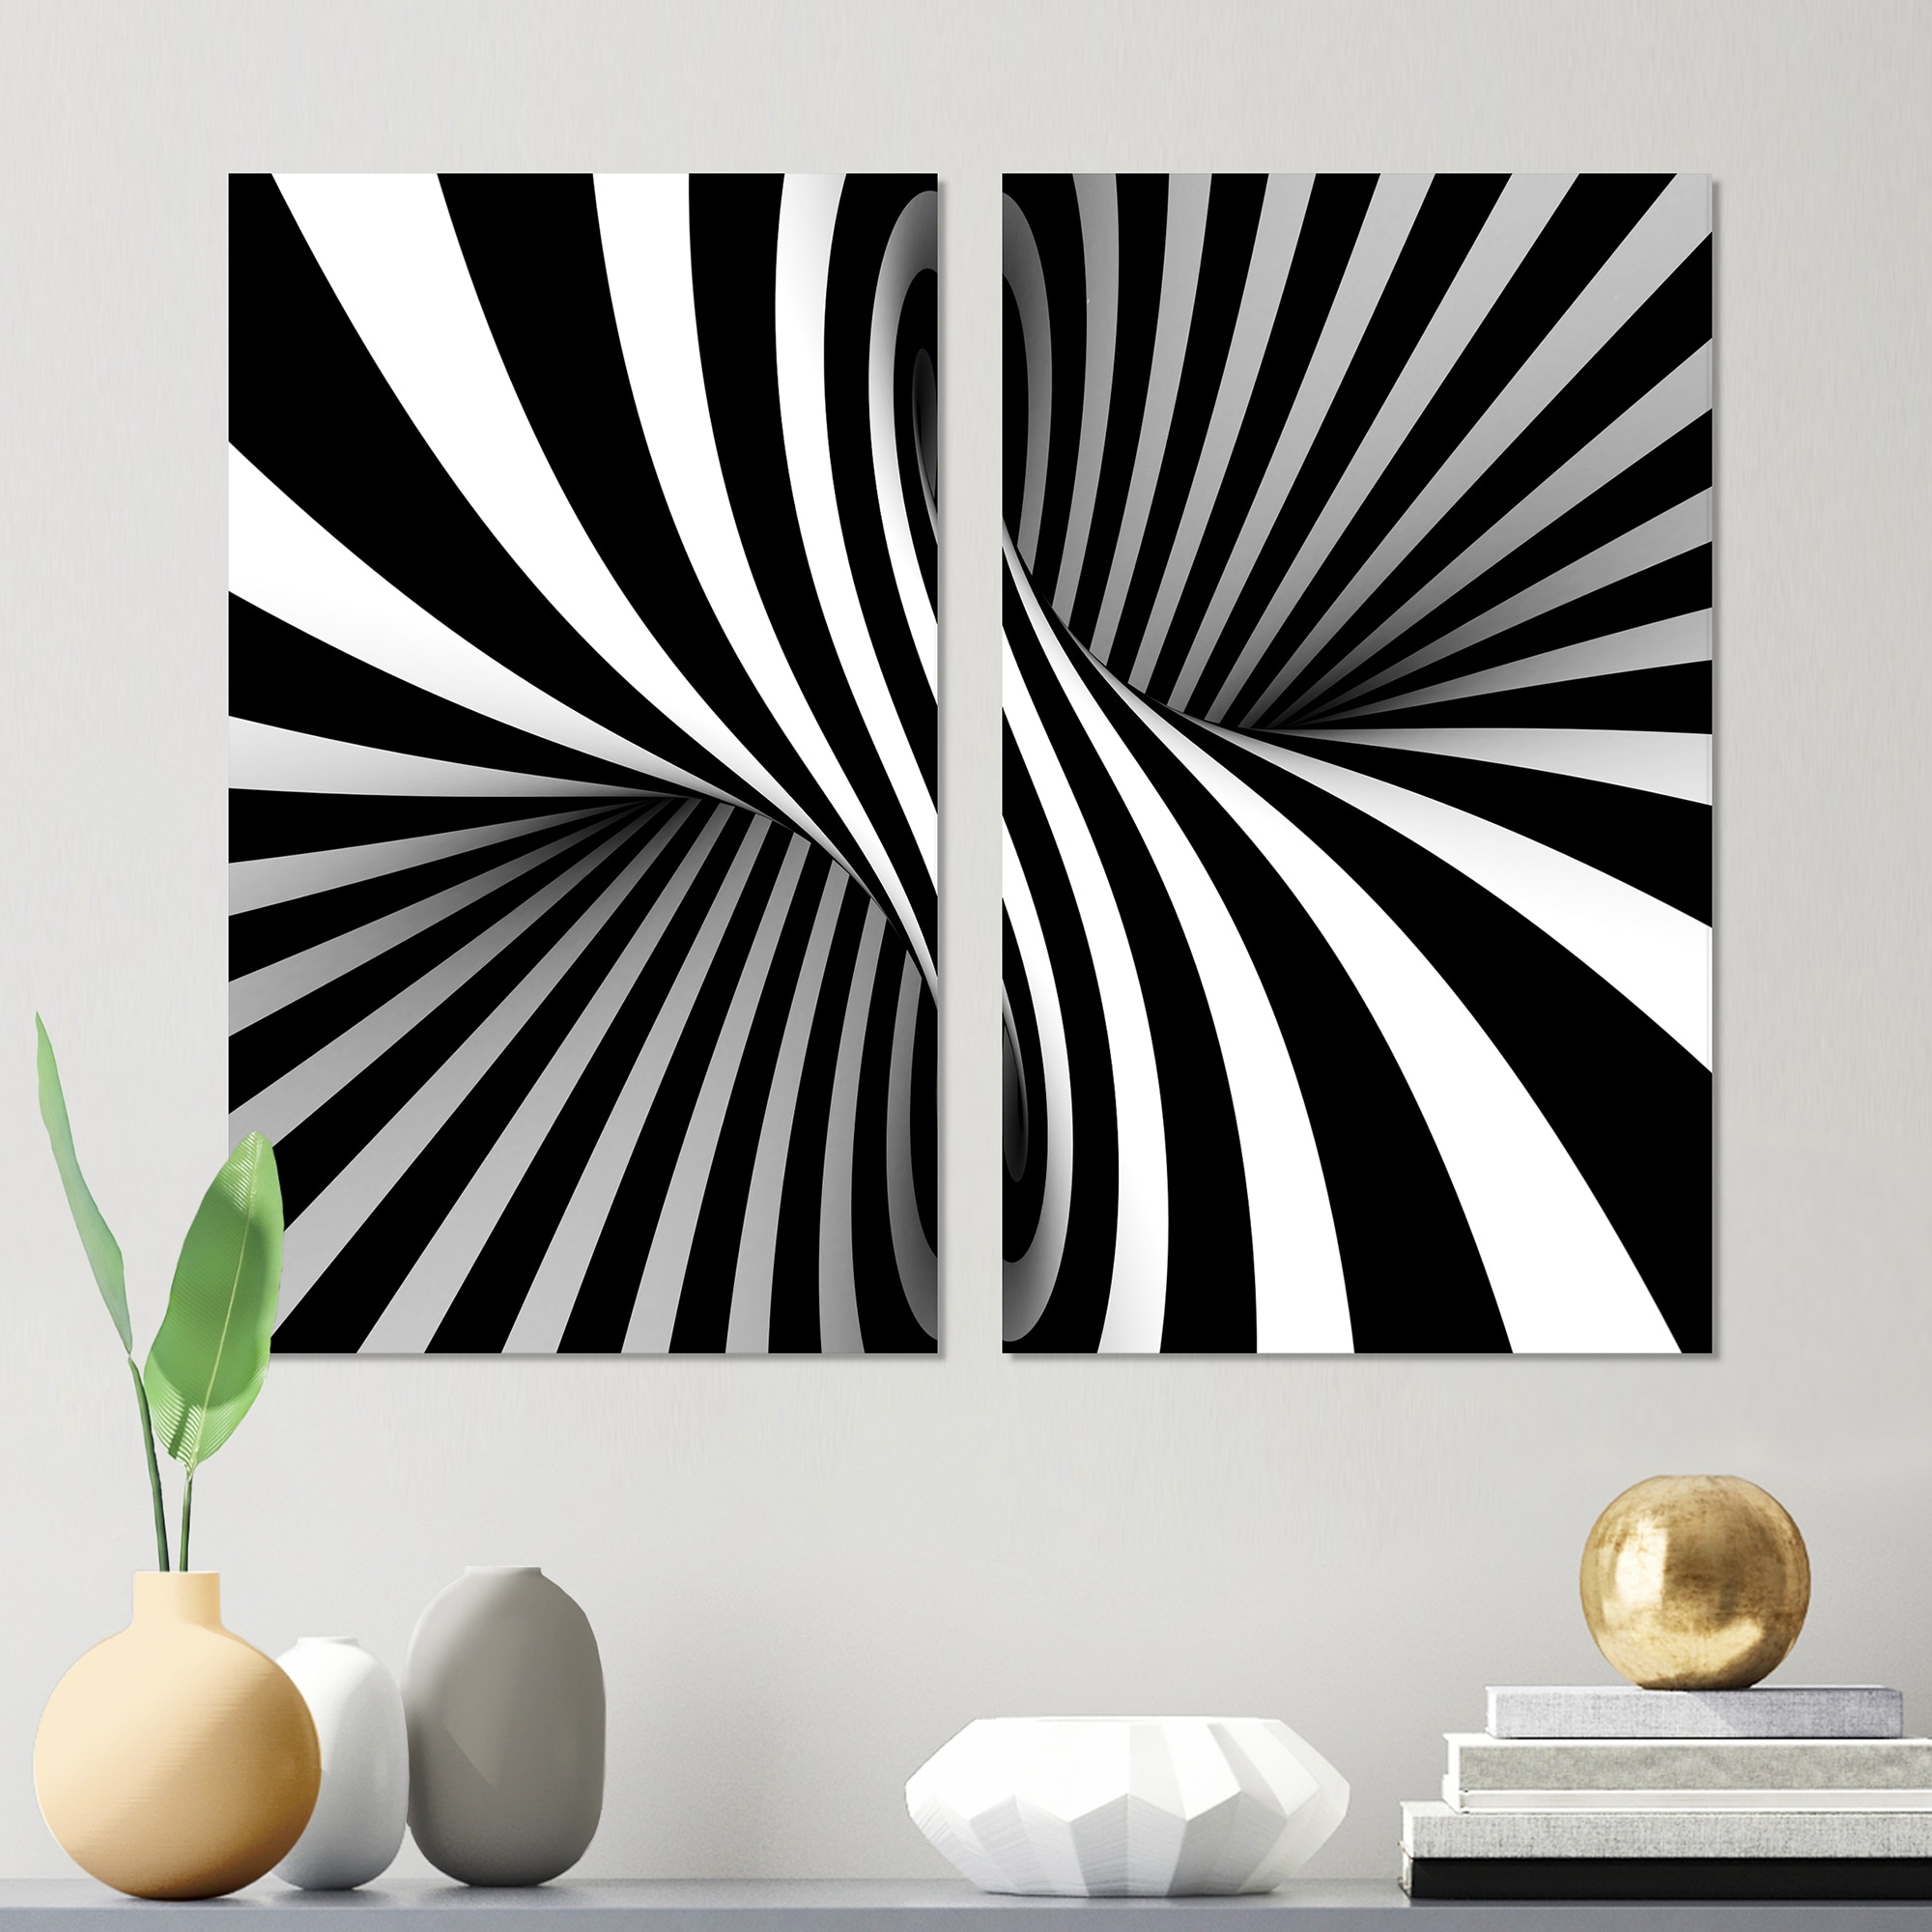 Designart 'Black and White Spiral' Abstract Canvas Wall Art Print 2 Piece Set